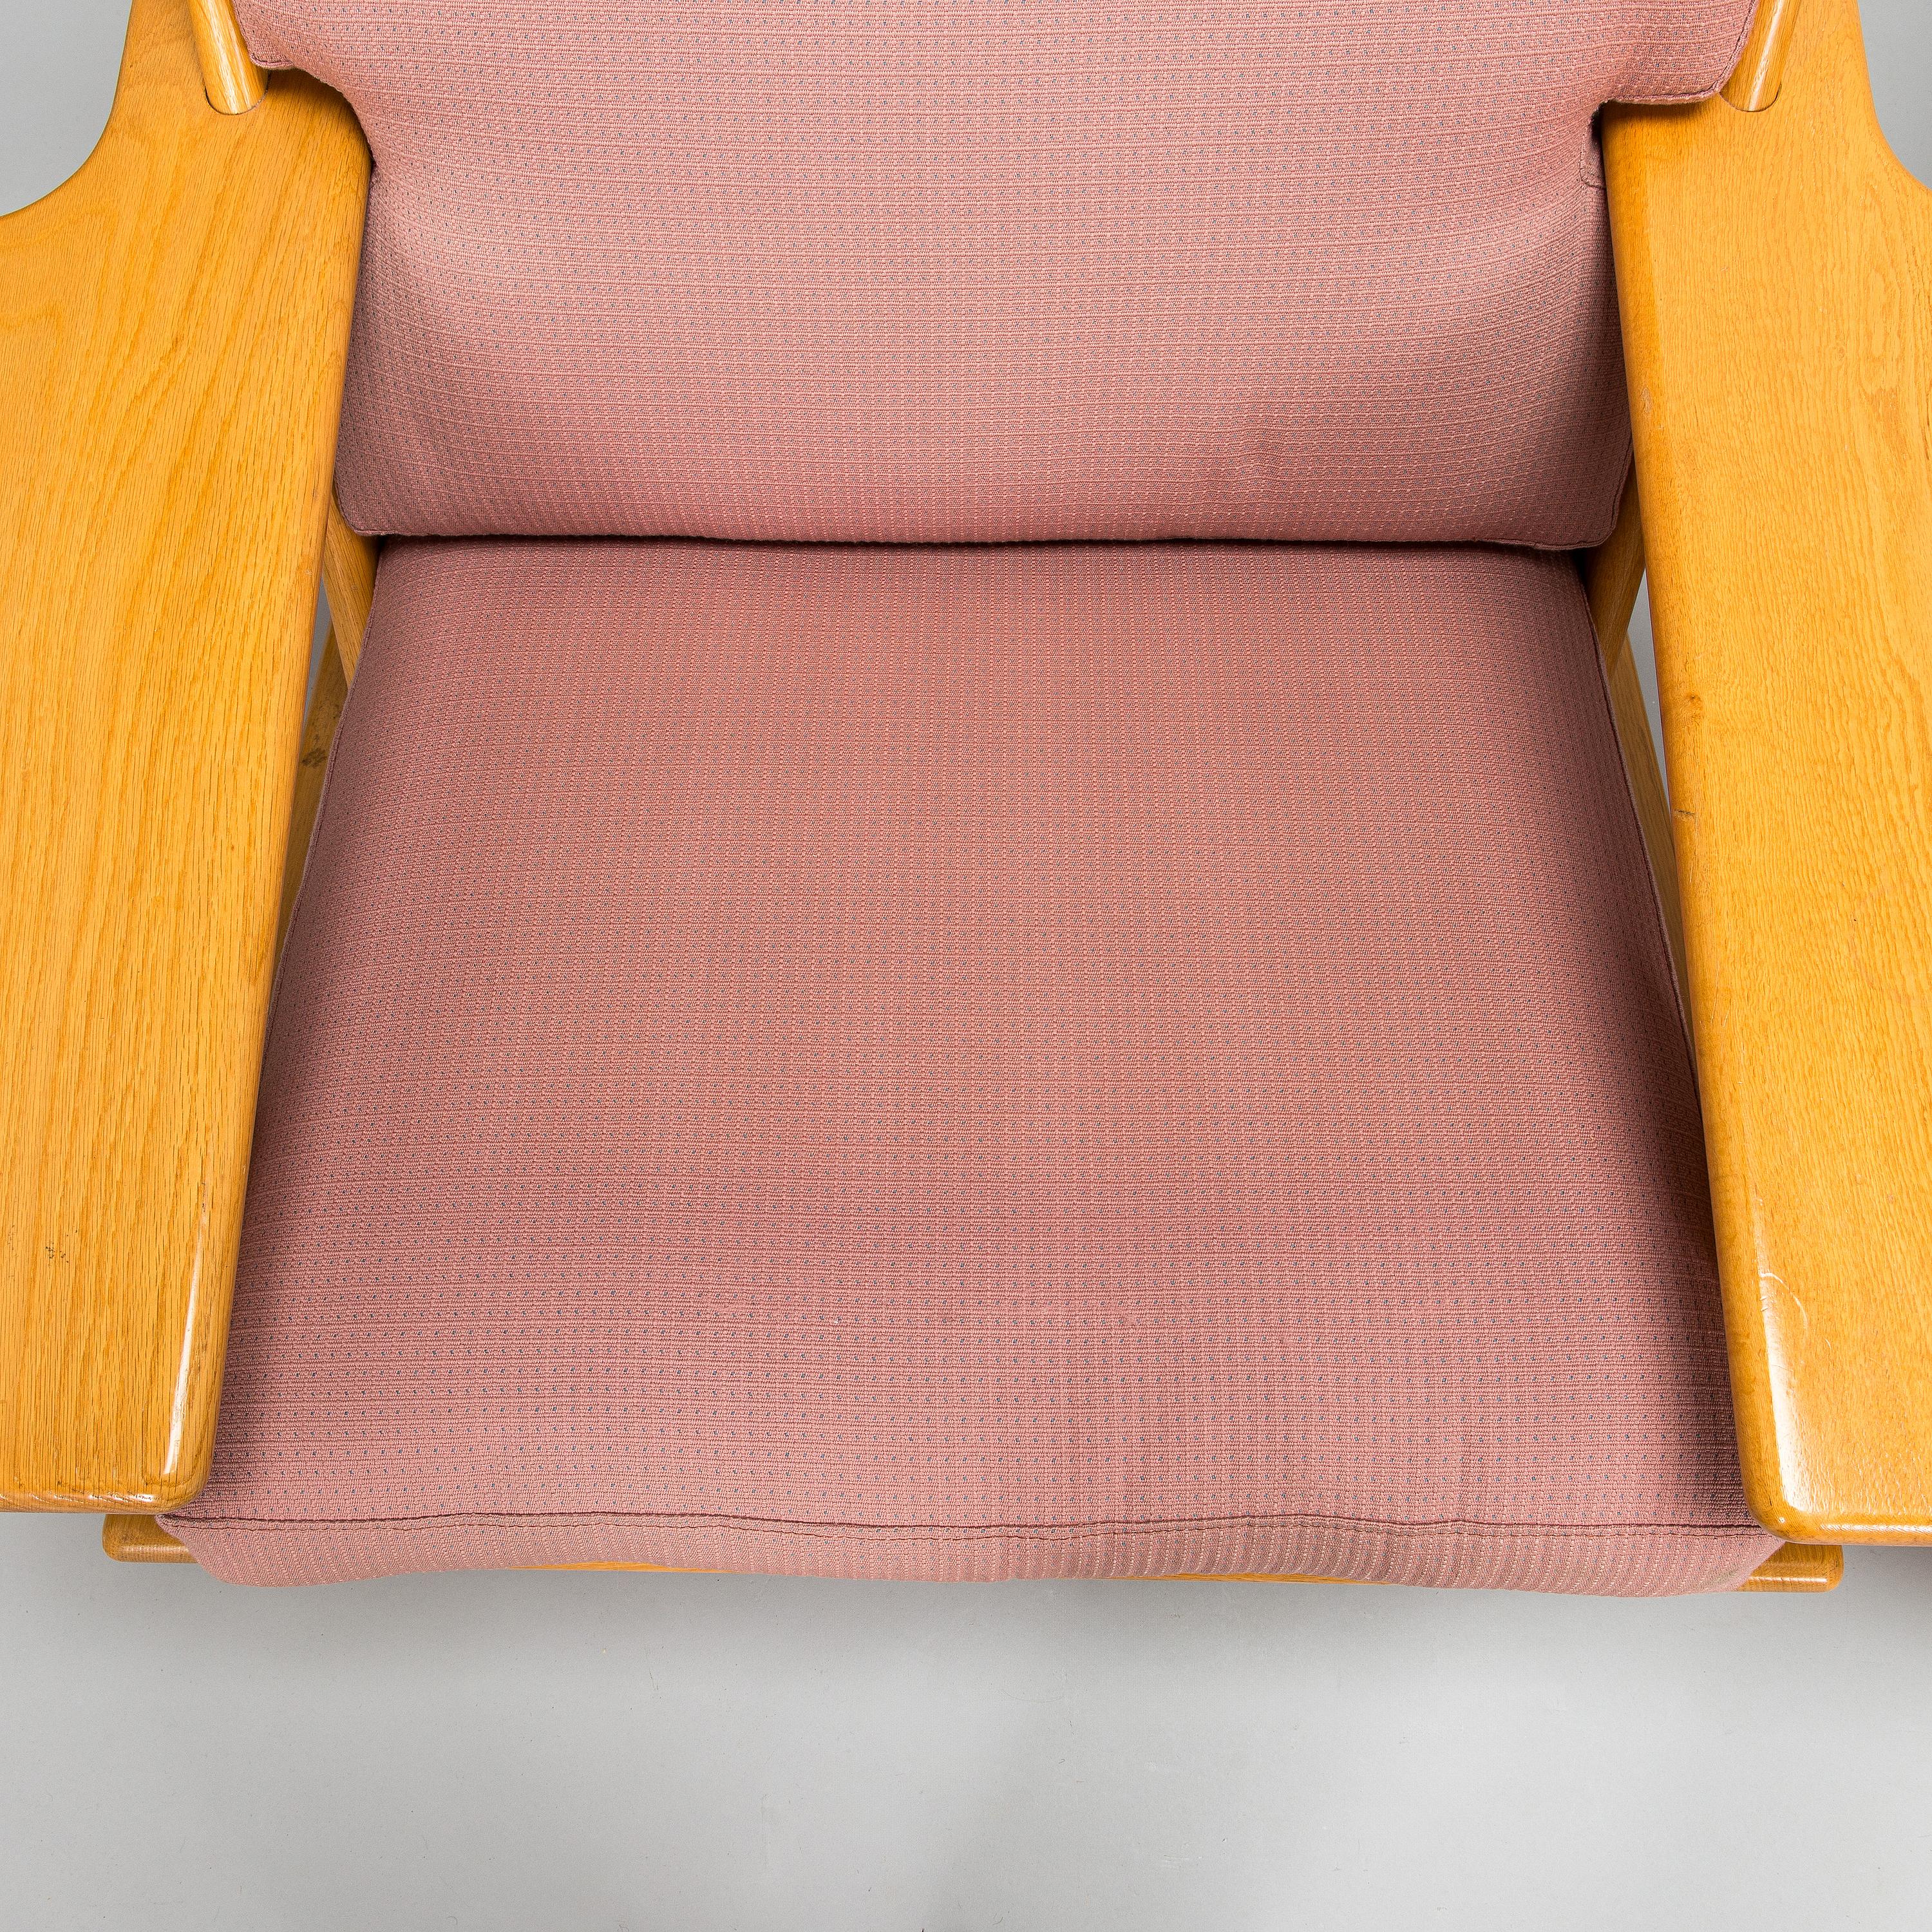 Esko Pajamies 'Pele' armchair for Lepofinn Finland 1970  For Sale 6